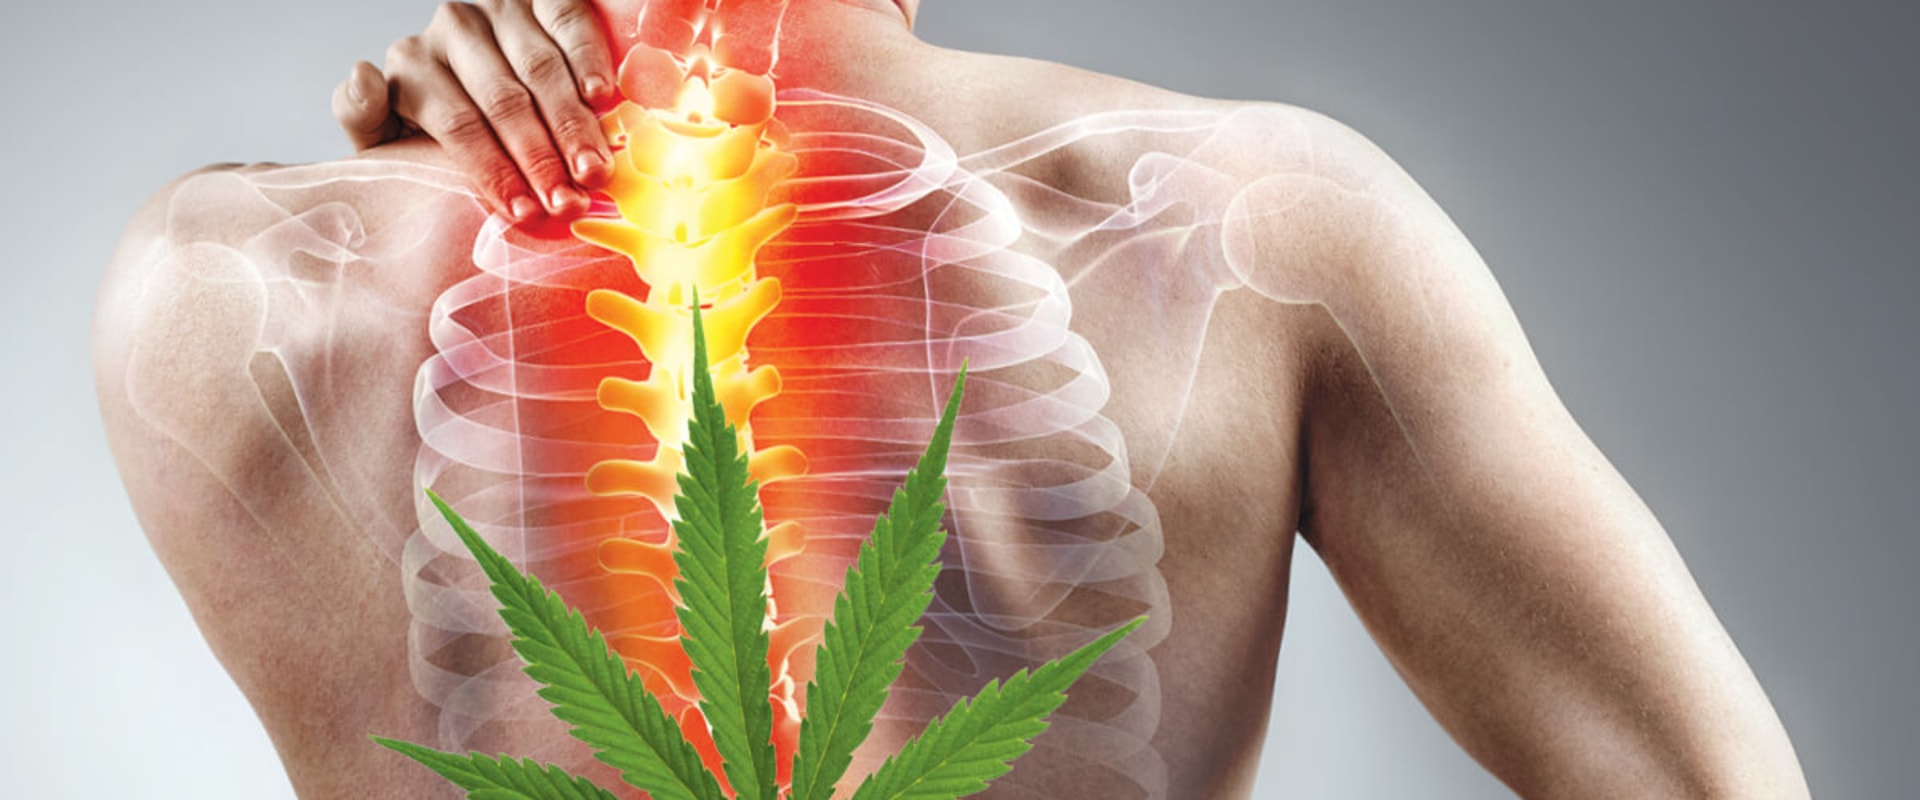 Can Medical Marijuana Help Relieve Back Pain?